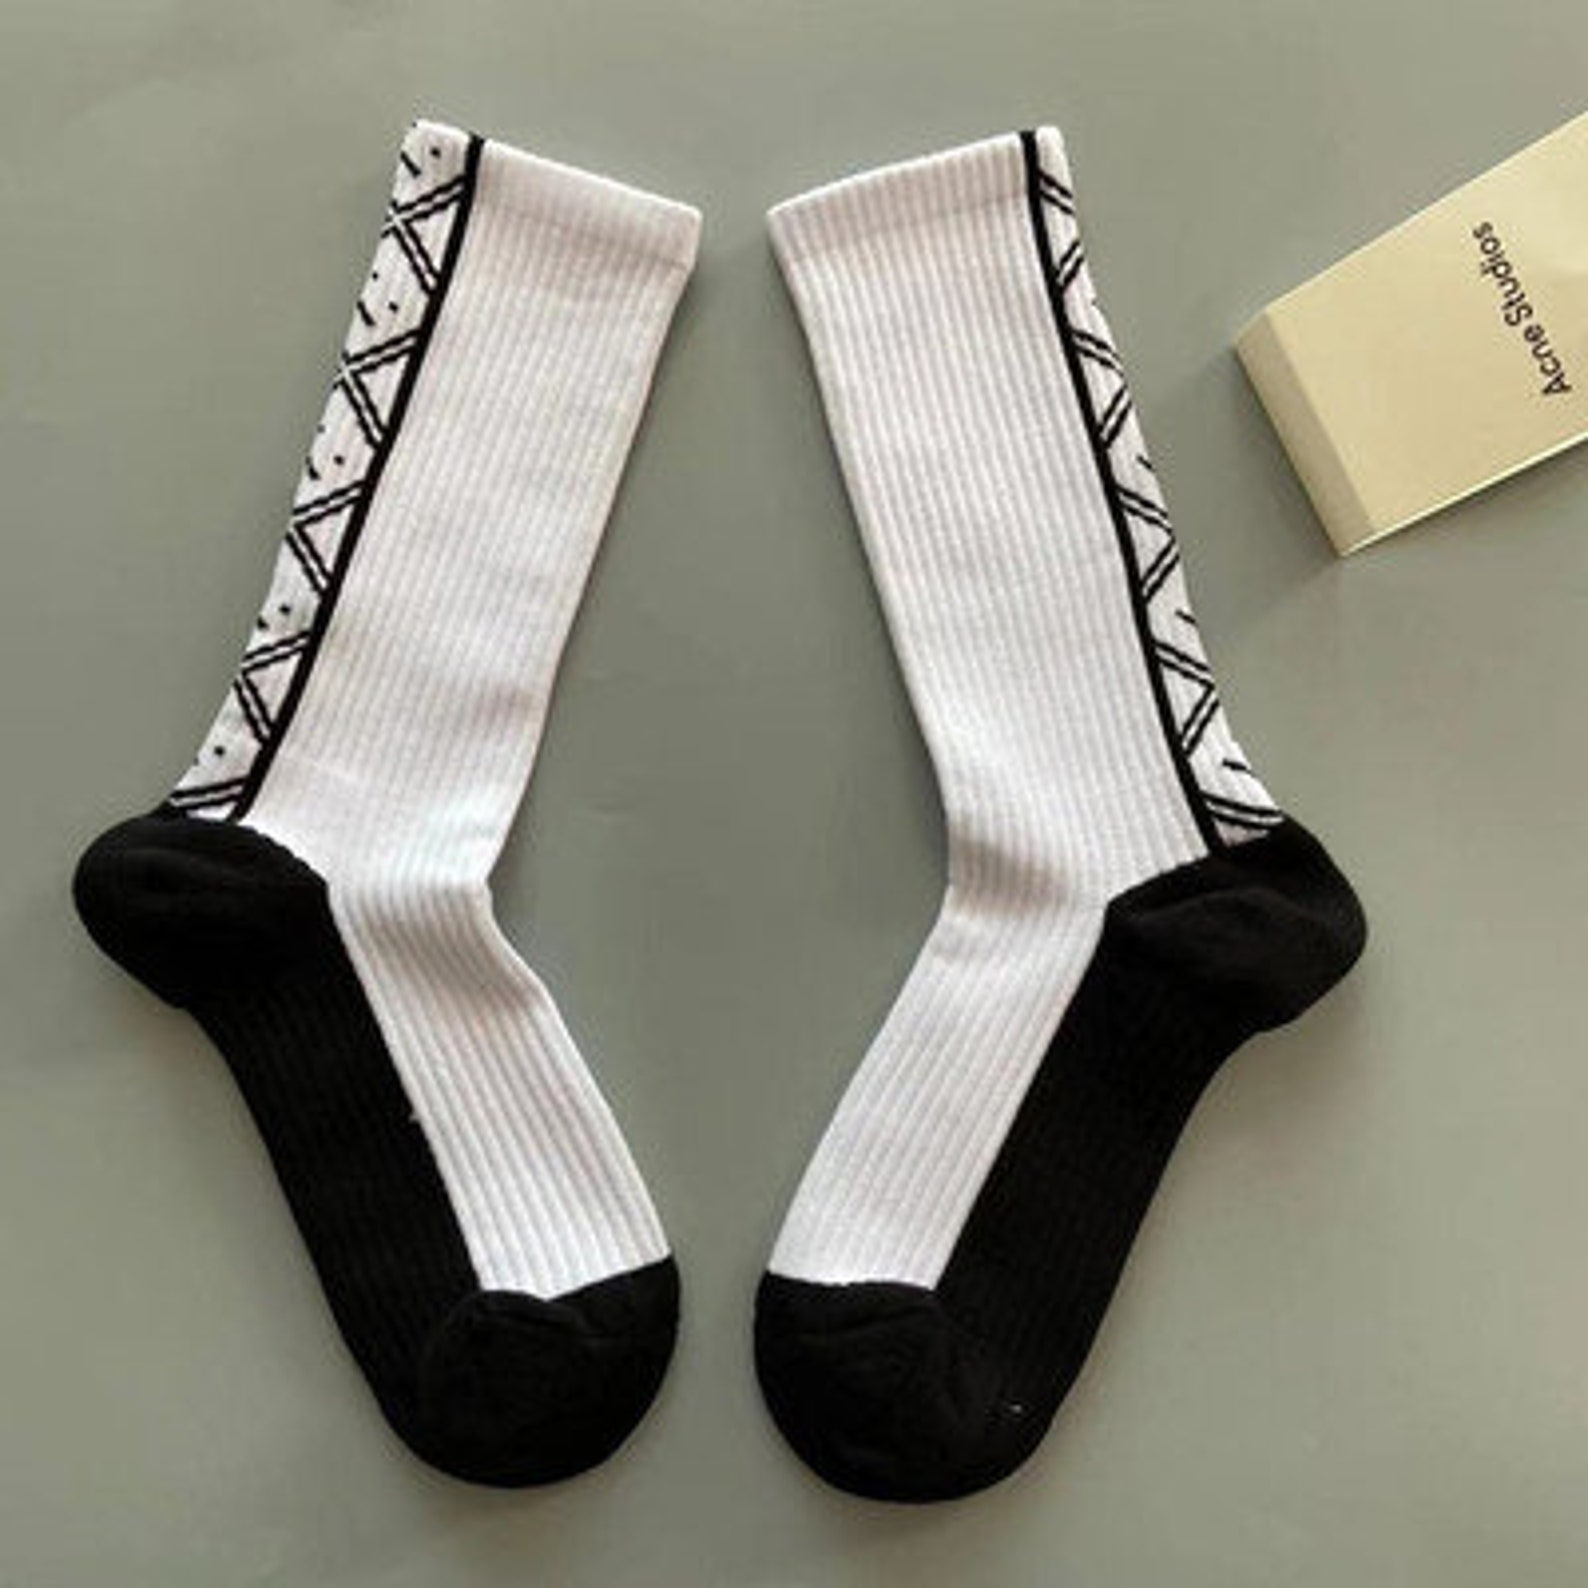 Acne Studios socks unisex socks Mid-calf cushioned socks | Etsy